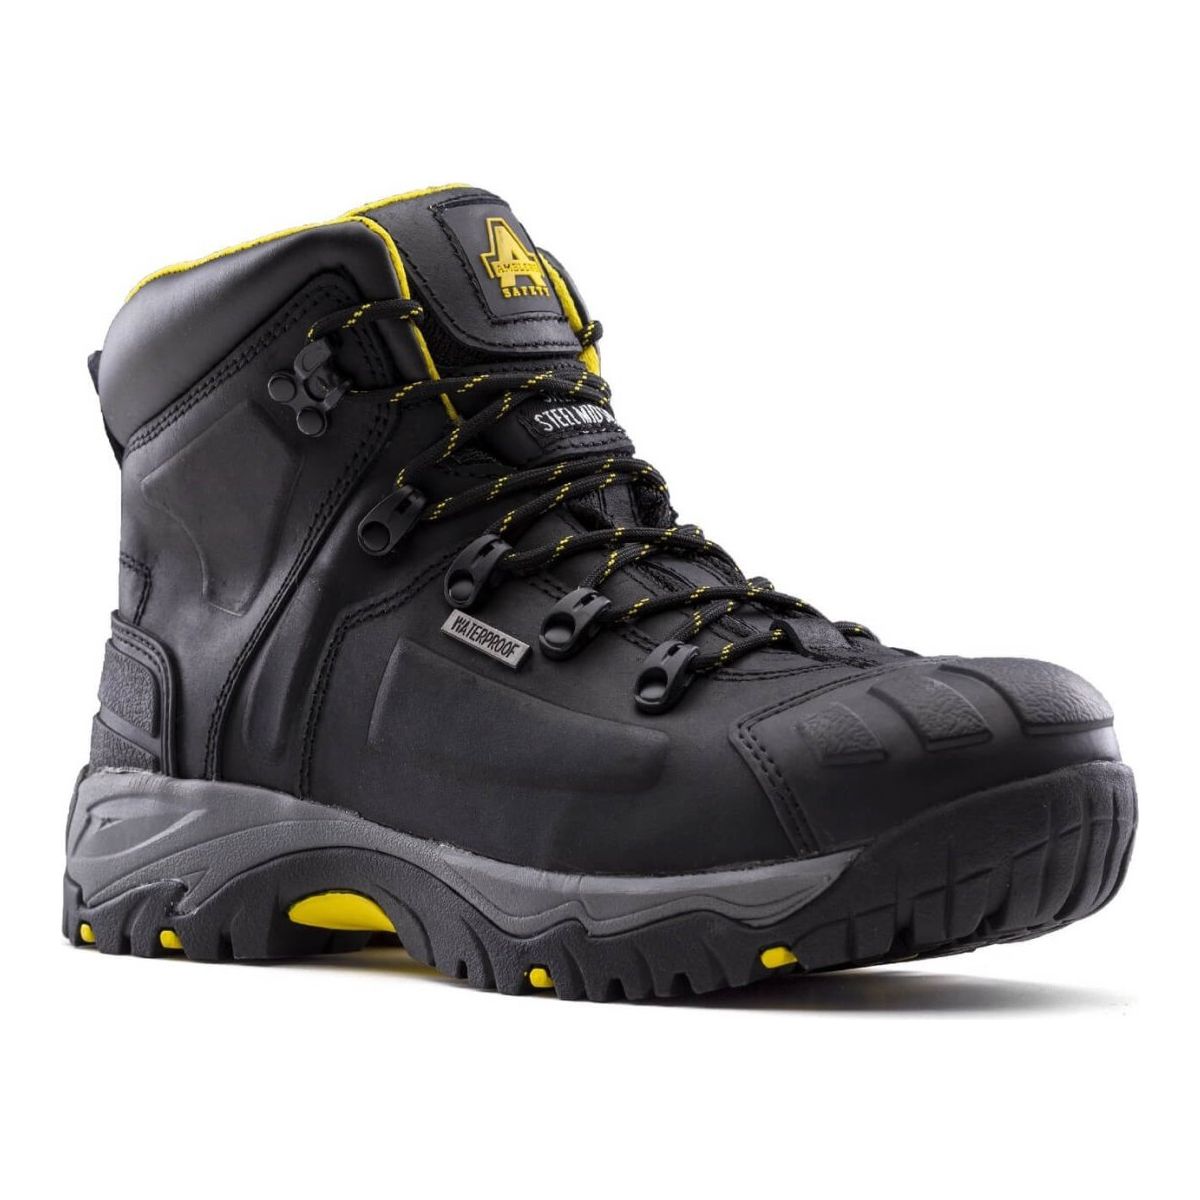 Amblers As803 Waterproof Safety Boots Mens - workweargurus.com